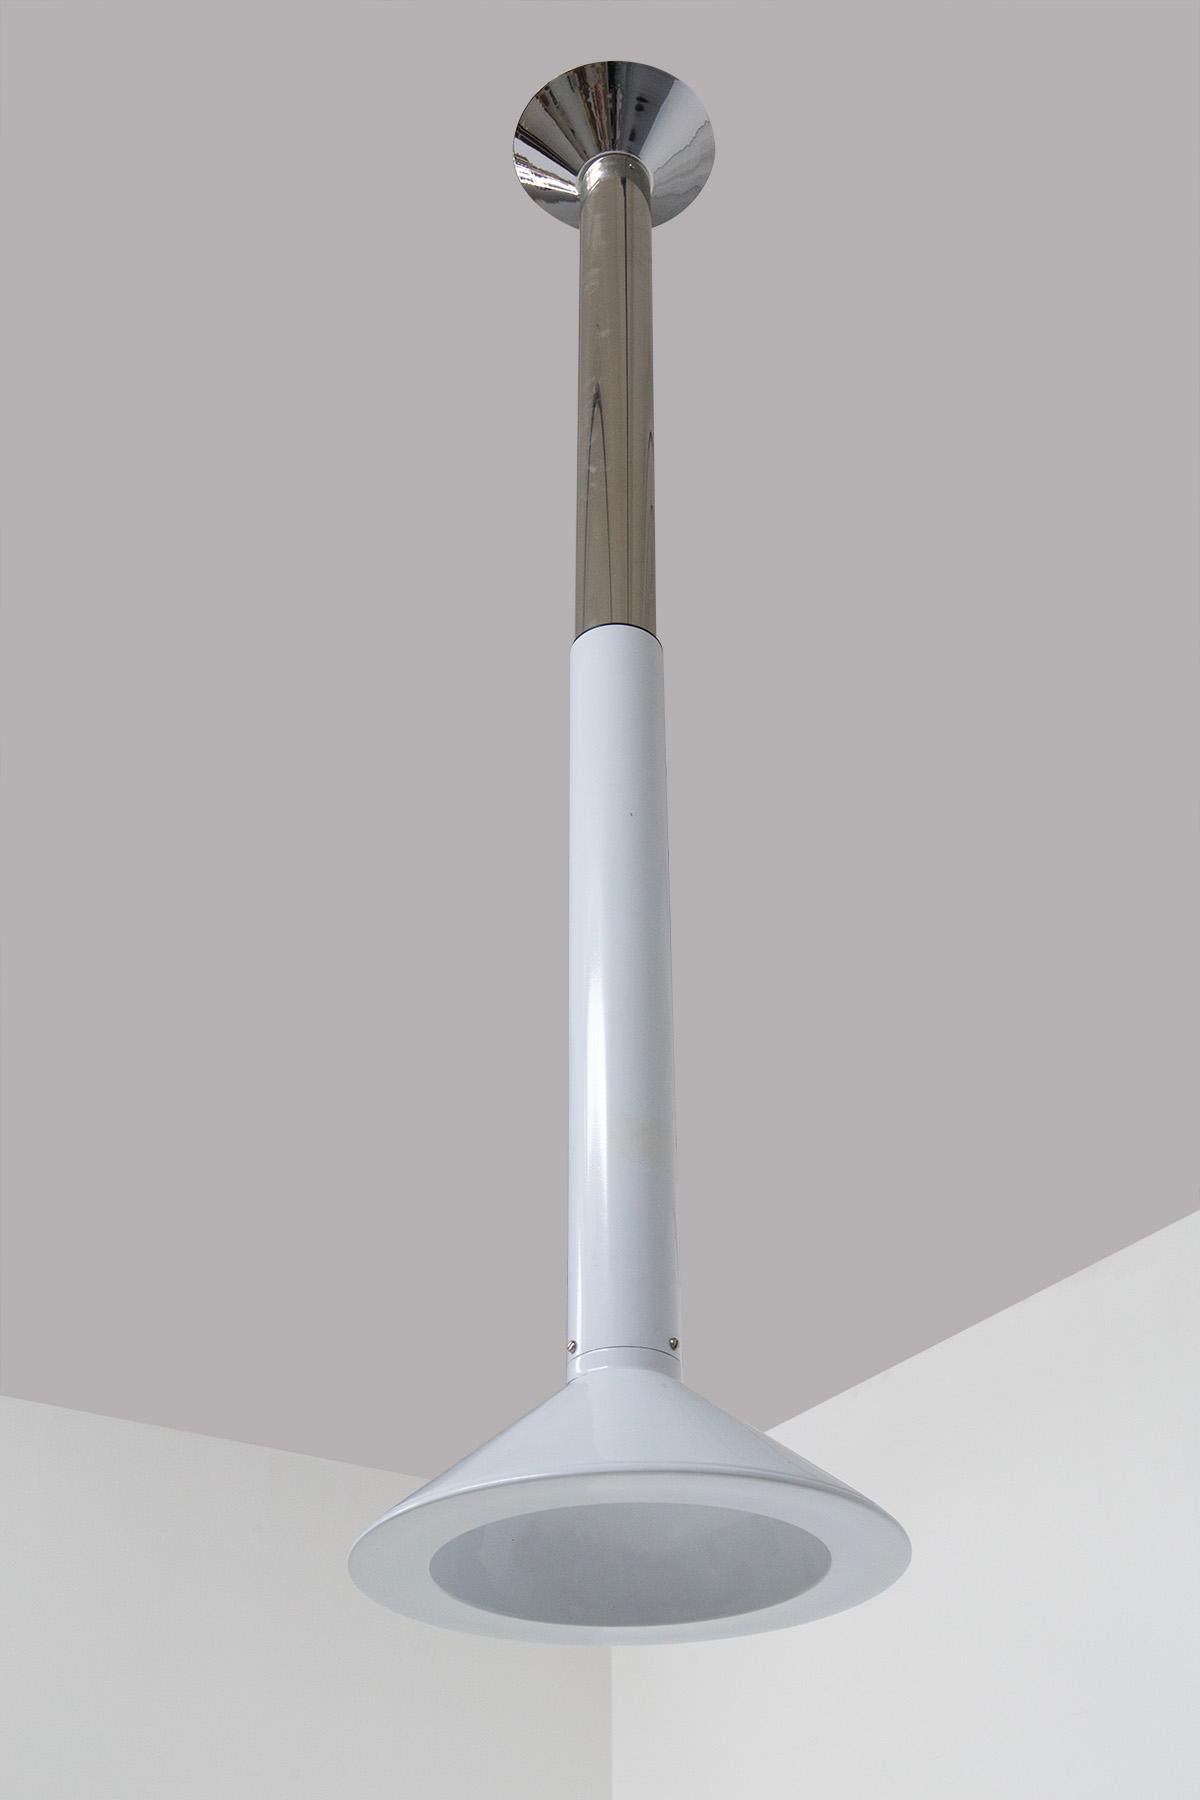 Late 20th Century Umberto Riva Suspension Lamp for Bieffeplast, original box 2165